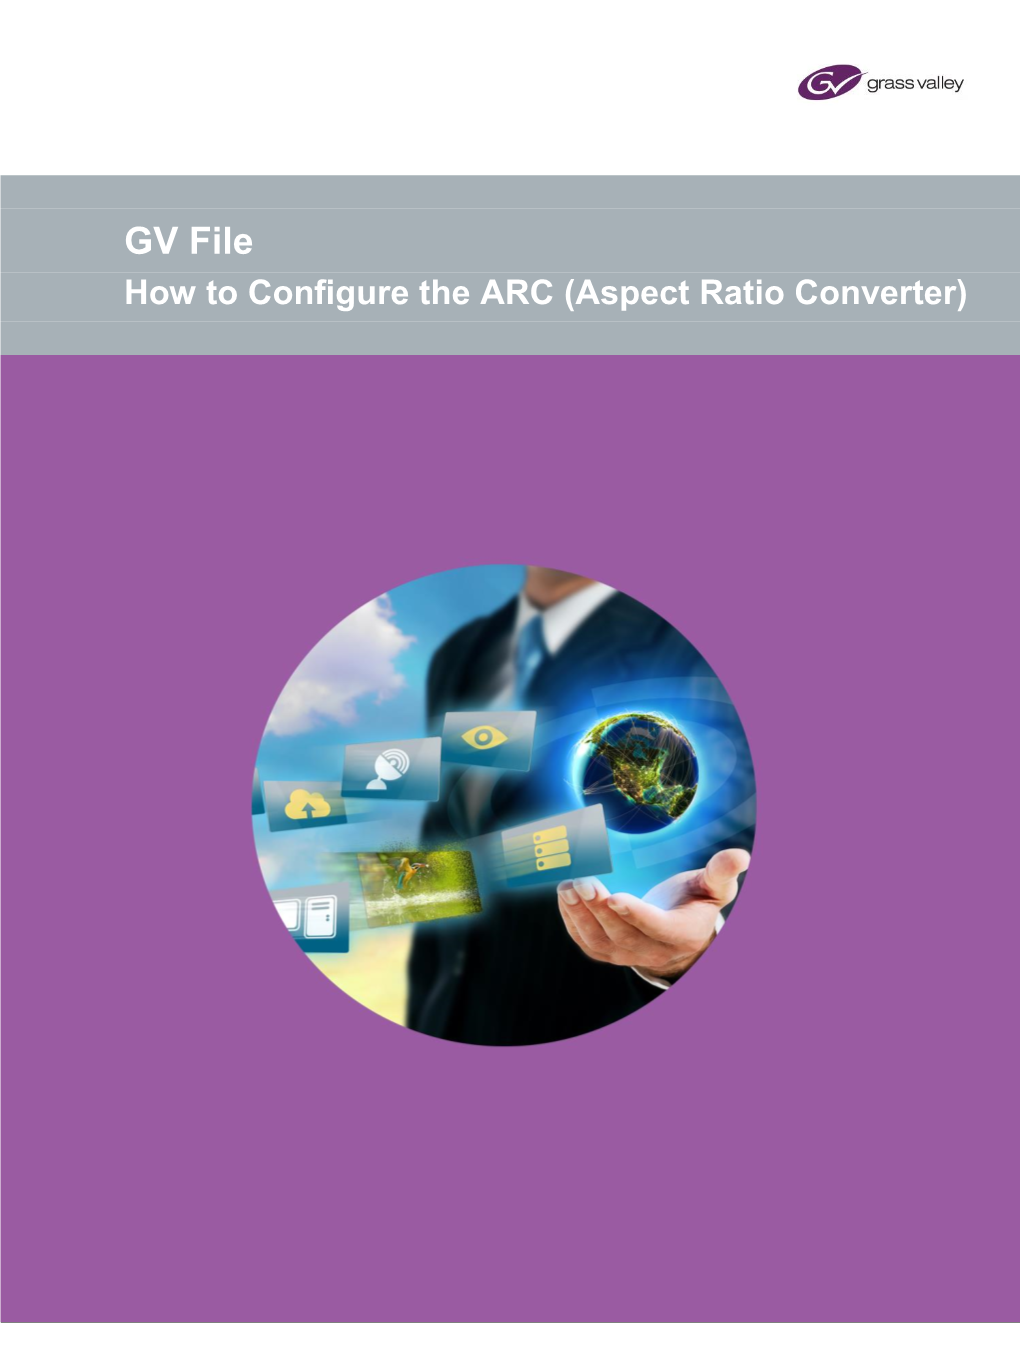 GV File How to Configure the ARC (Aspect Ratio Converter)